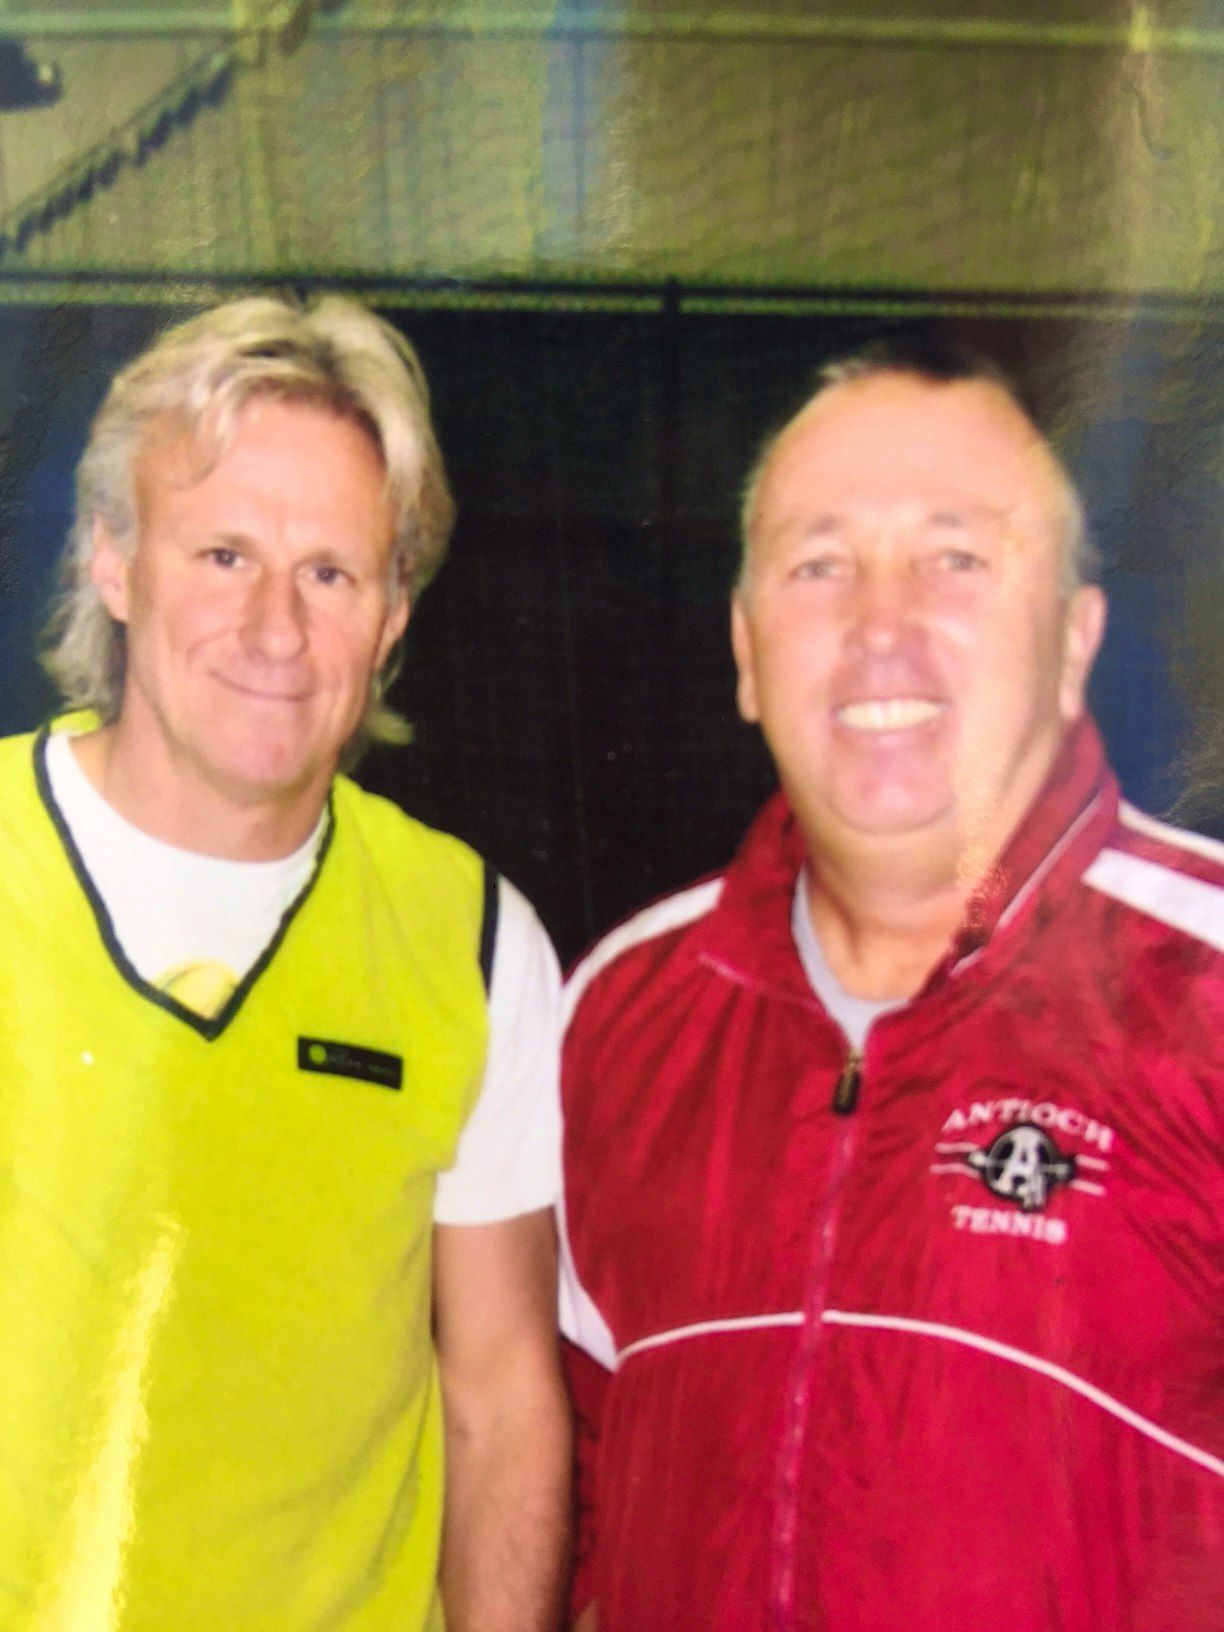 Randy D. teaches tennis lessons in Bristol, WI